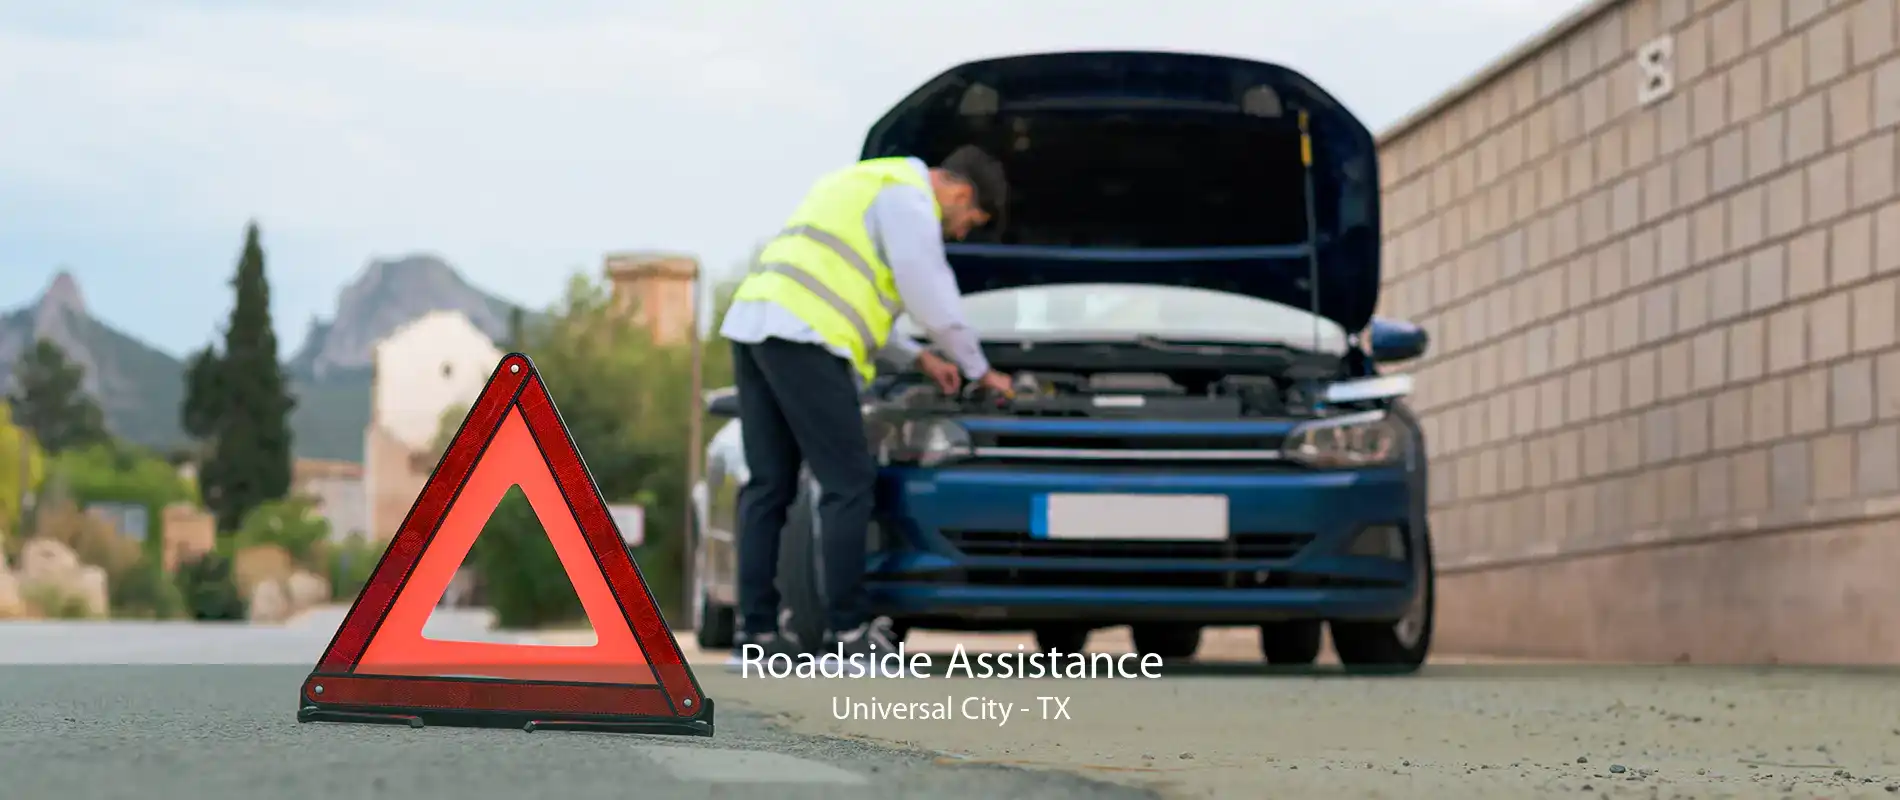 Roadside Assistance Universal City - TX